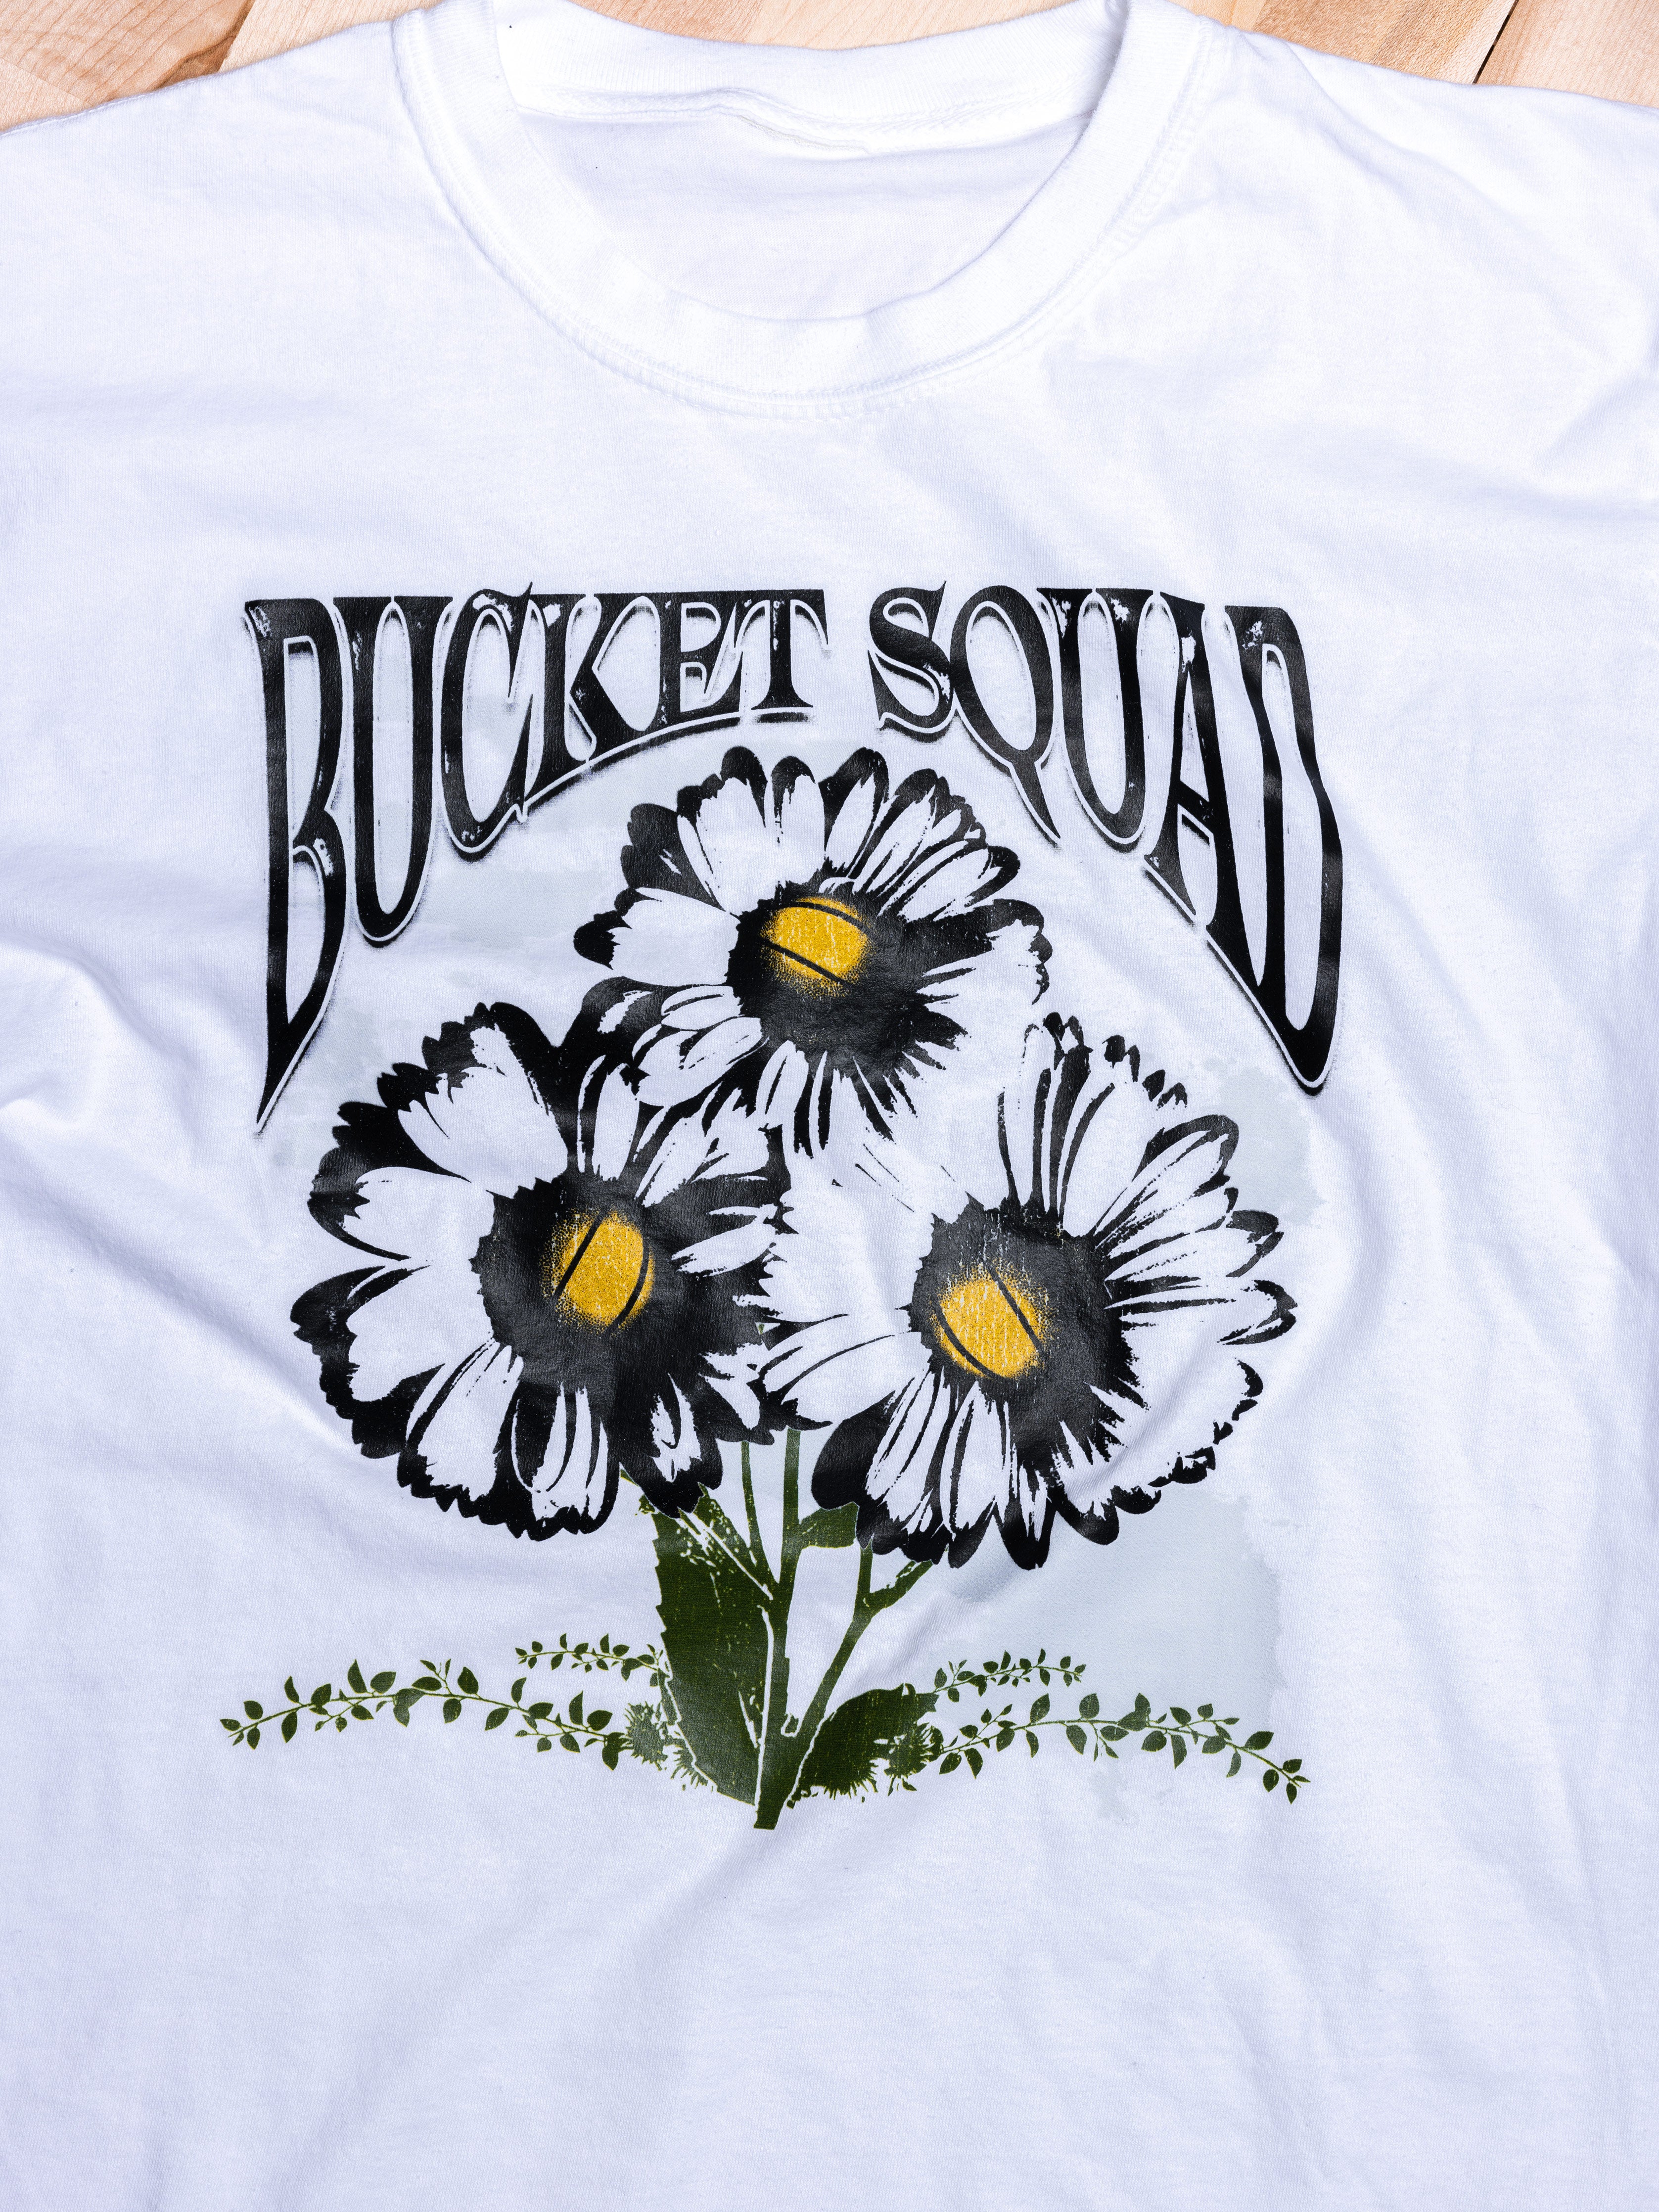 Floral Bucketsquad Shirt - Daisy - ADULT